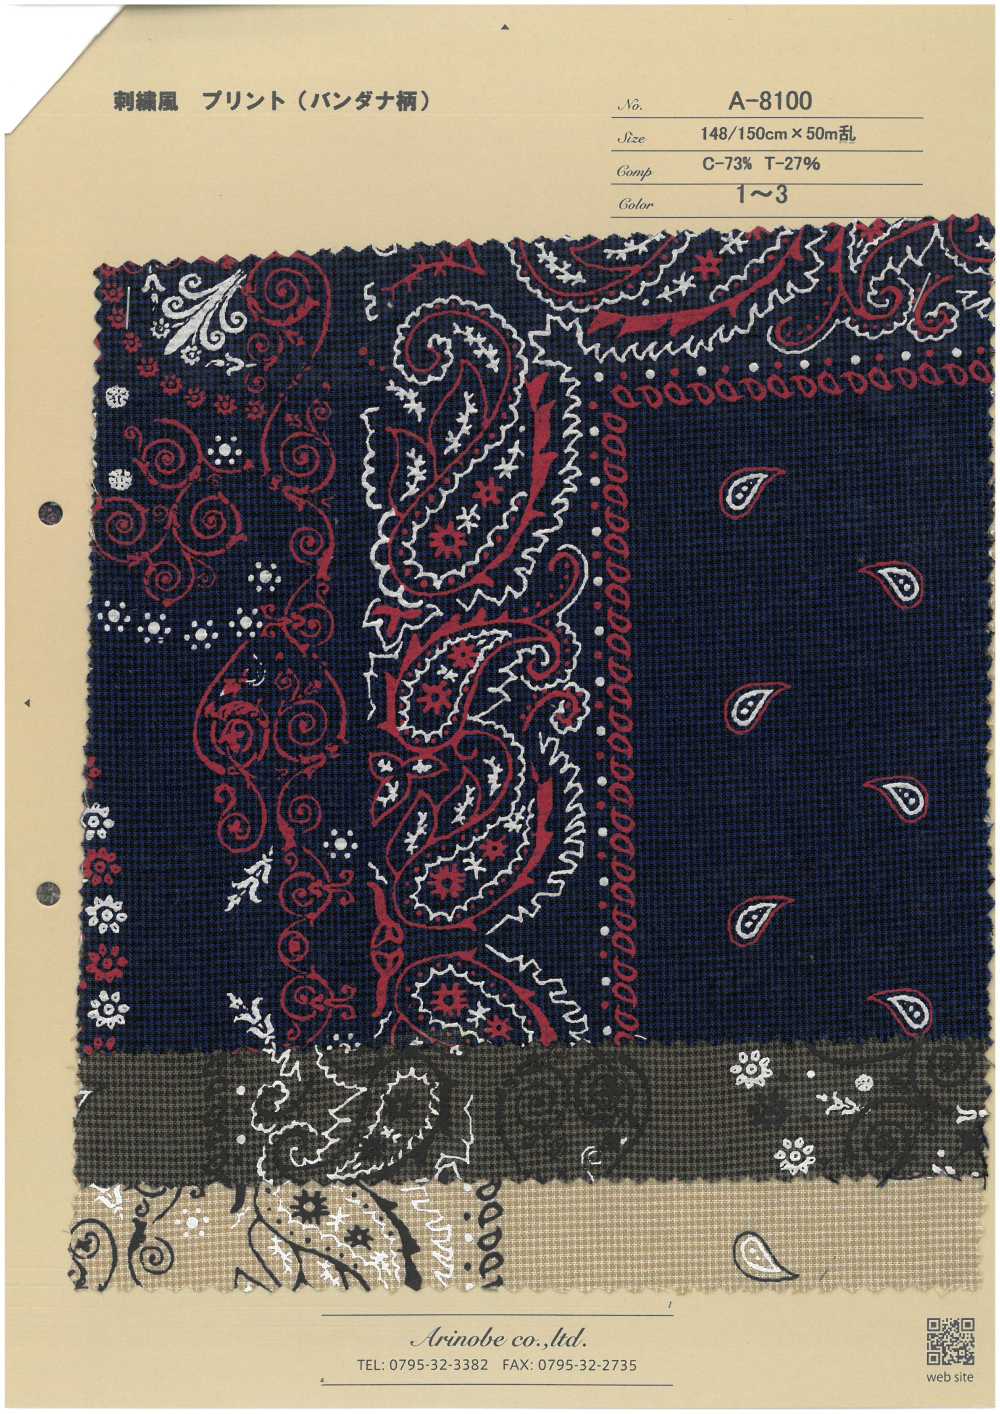 A-8100 Embroidery Style Printed Textile Bandana Pattern[Textile / Fabric] ARINOBE CO., LTD.